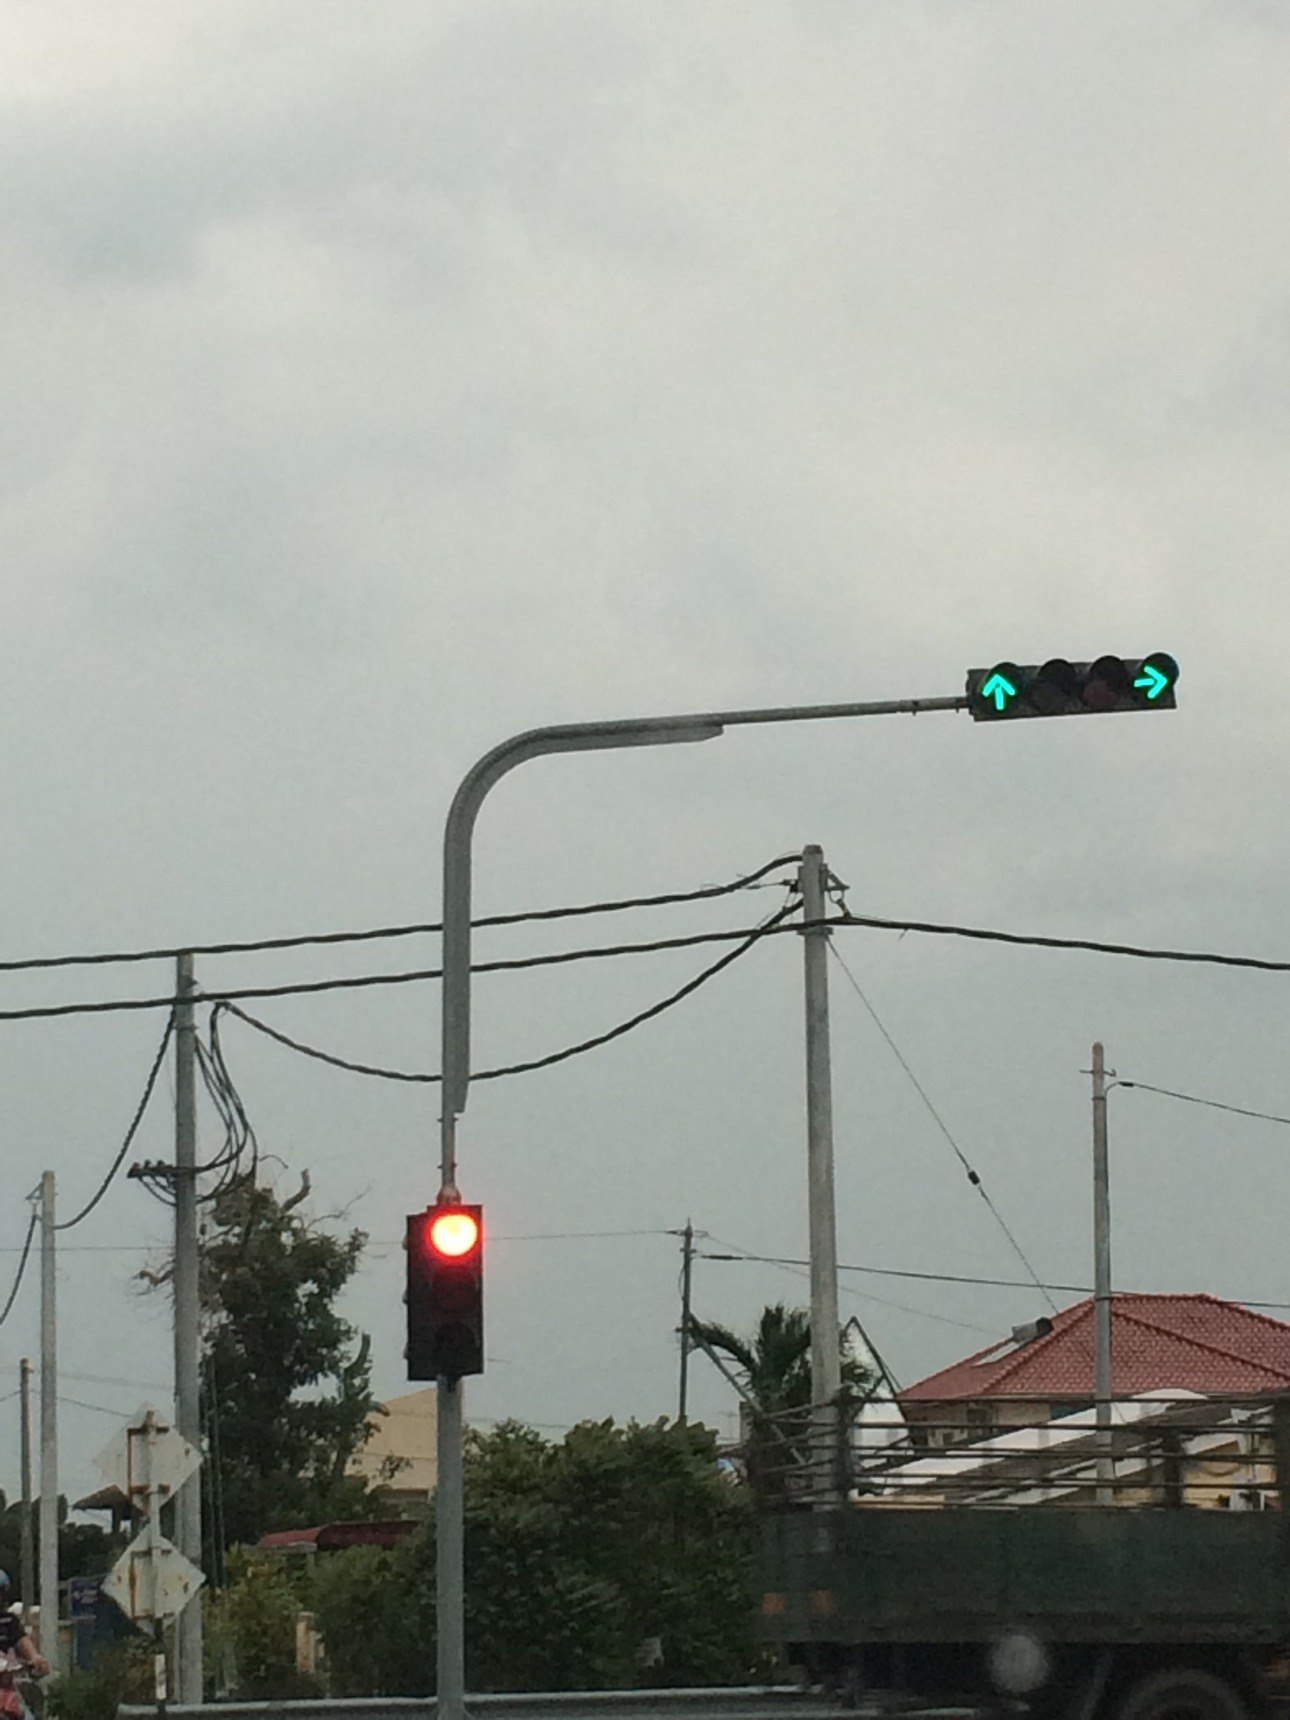 go home traffic light, you're drunk - meme